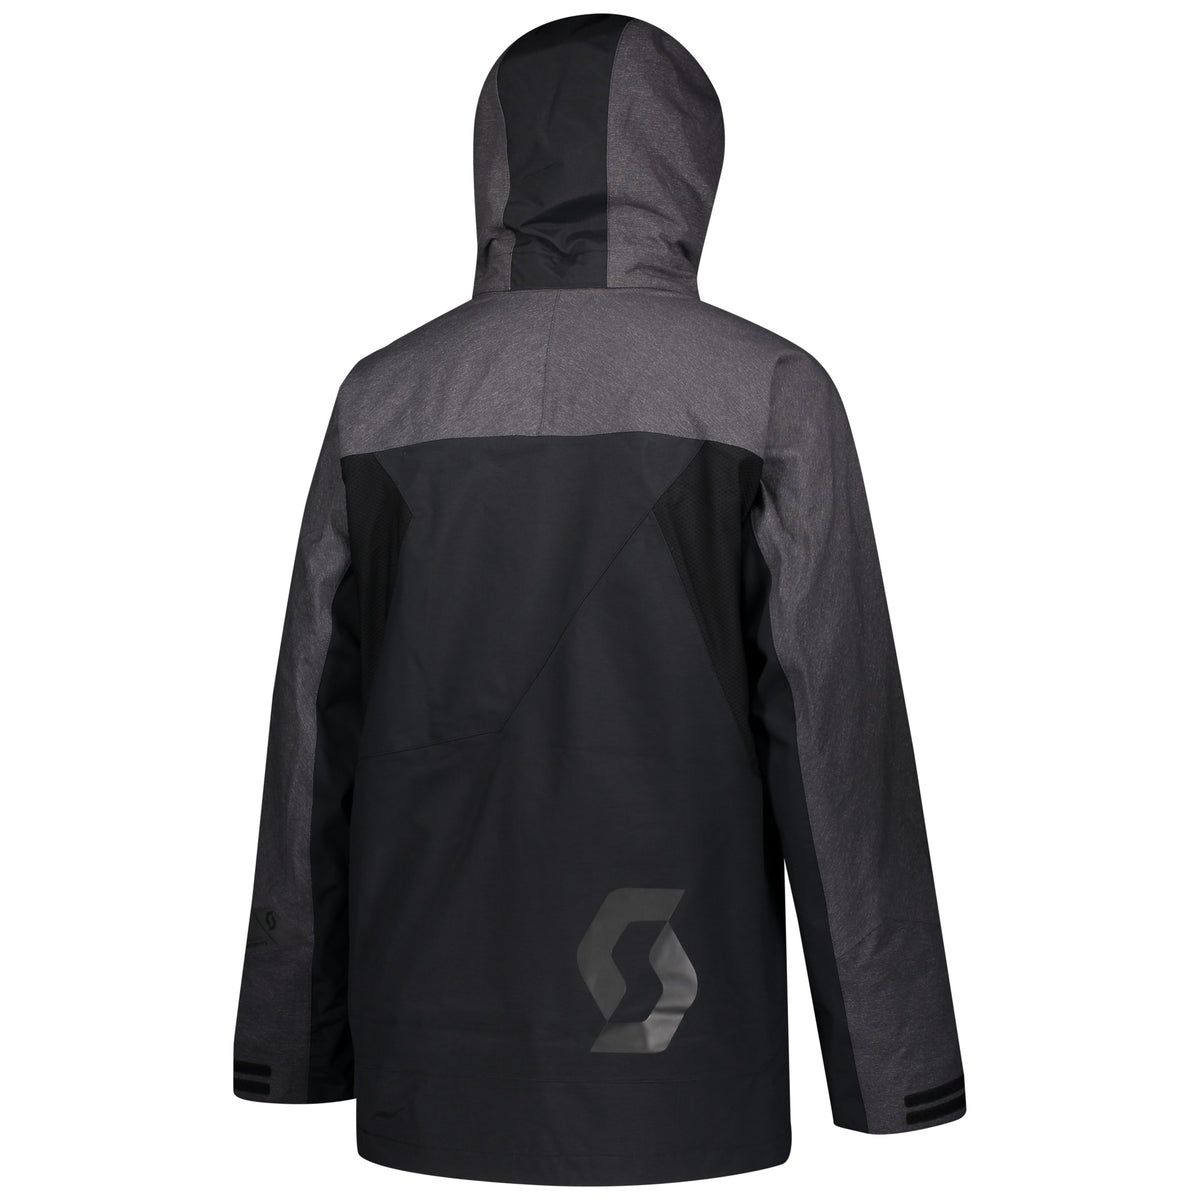 Scott XT Shell Dryo Jacket